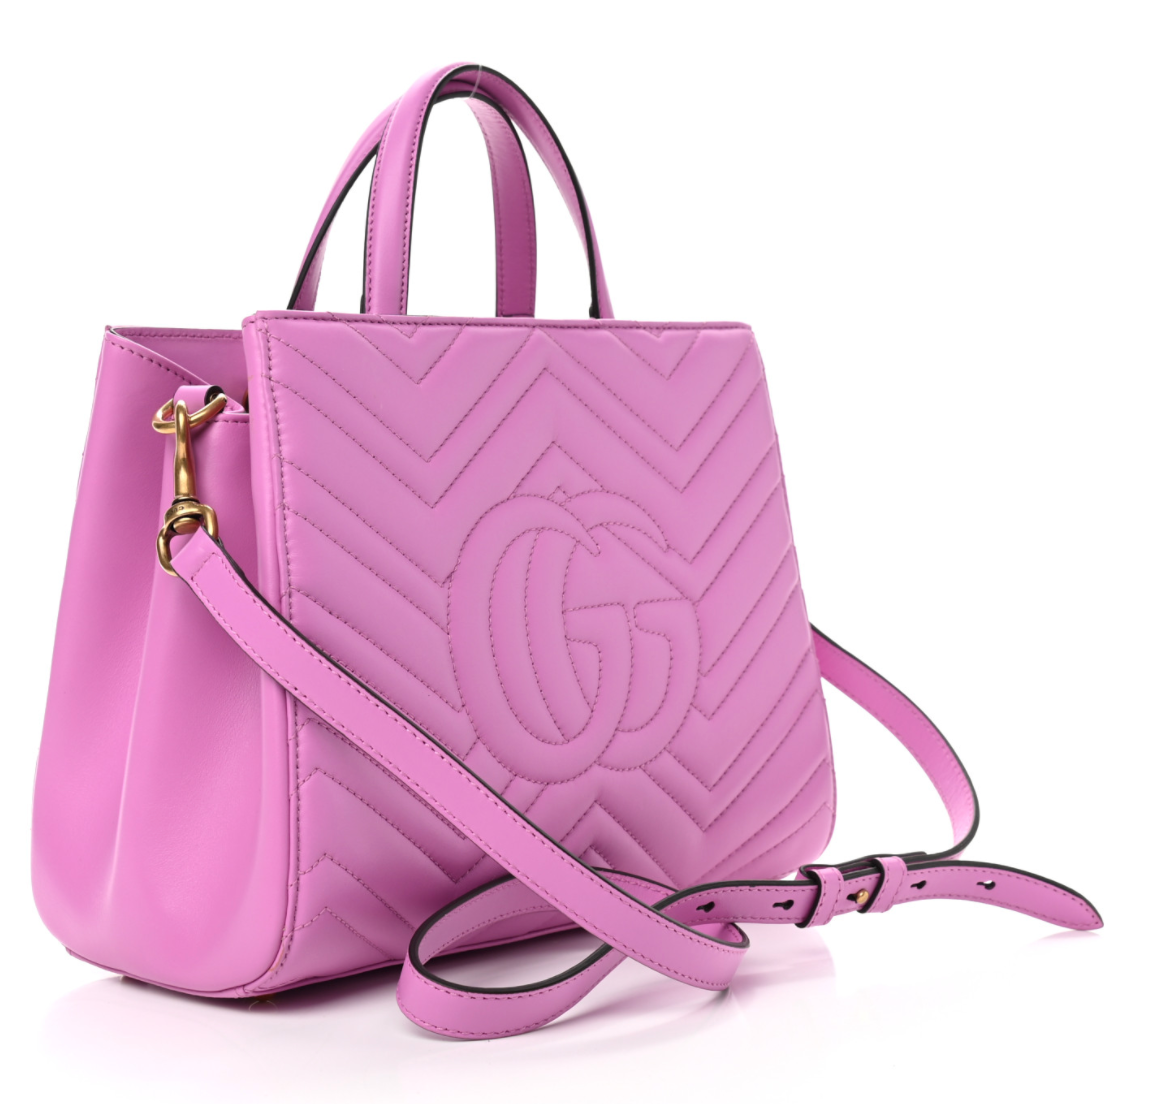 Gucci // Candy Pink GG Marmont Matelassé Camera Bag – VSP Consignment